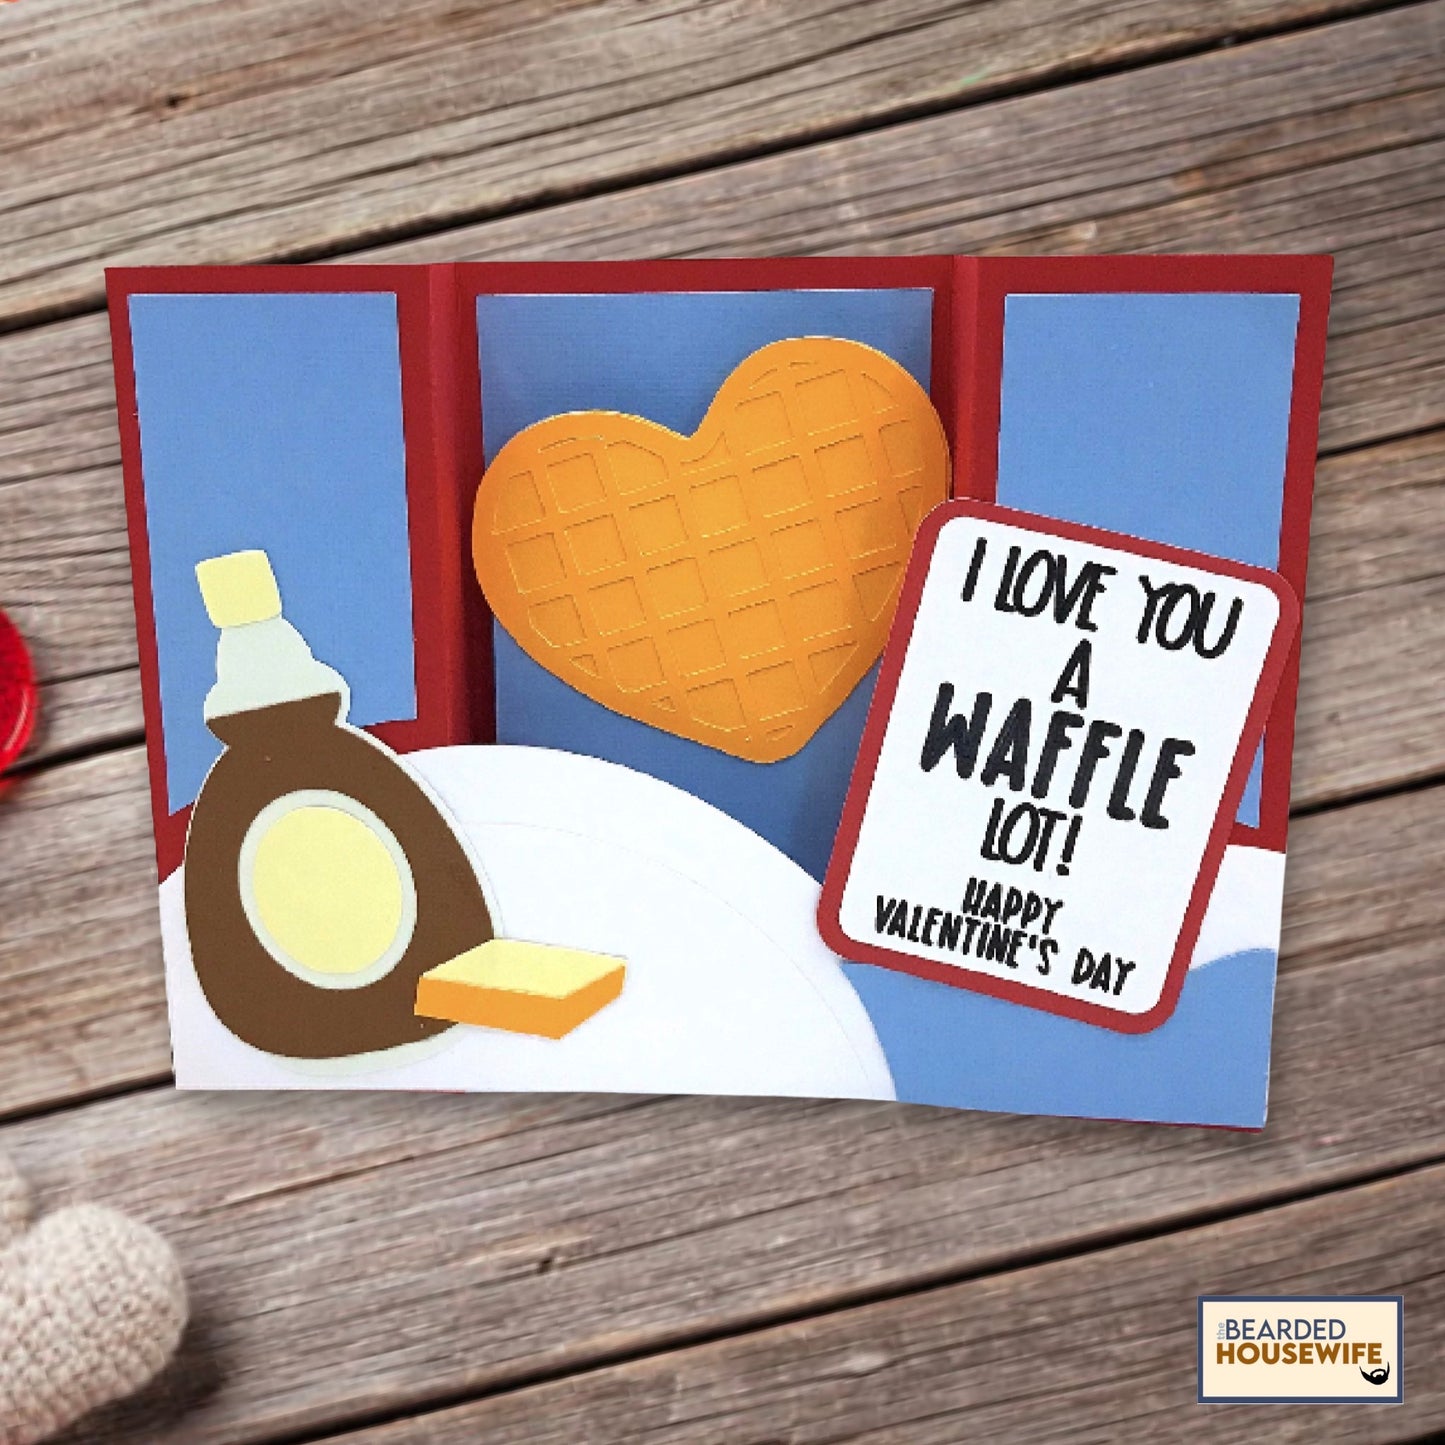 Waffle Lot Valentine Bridge Card